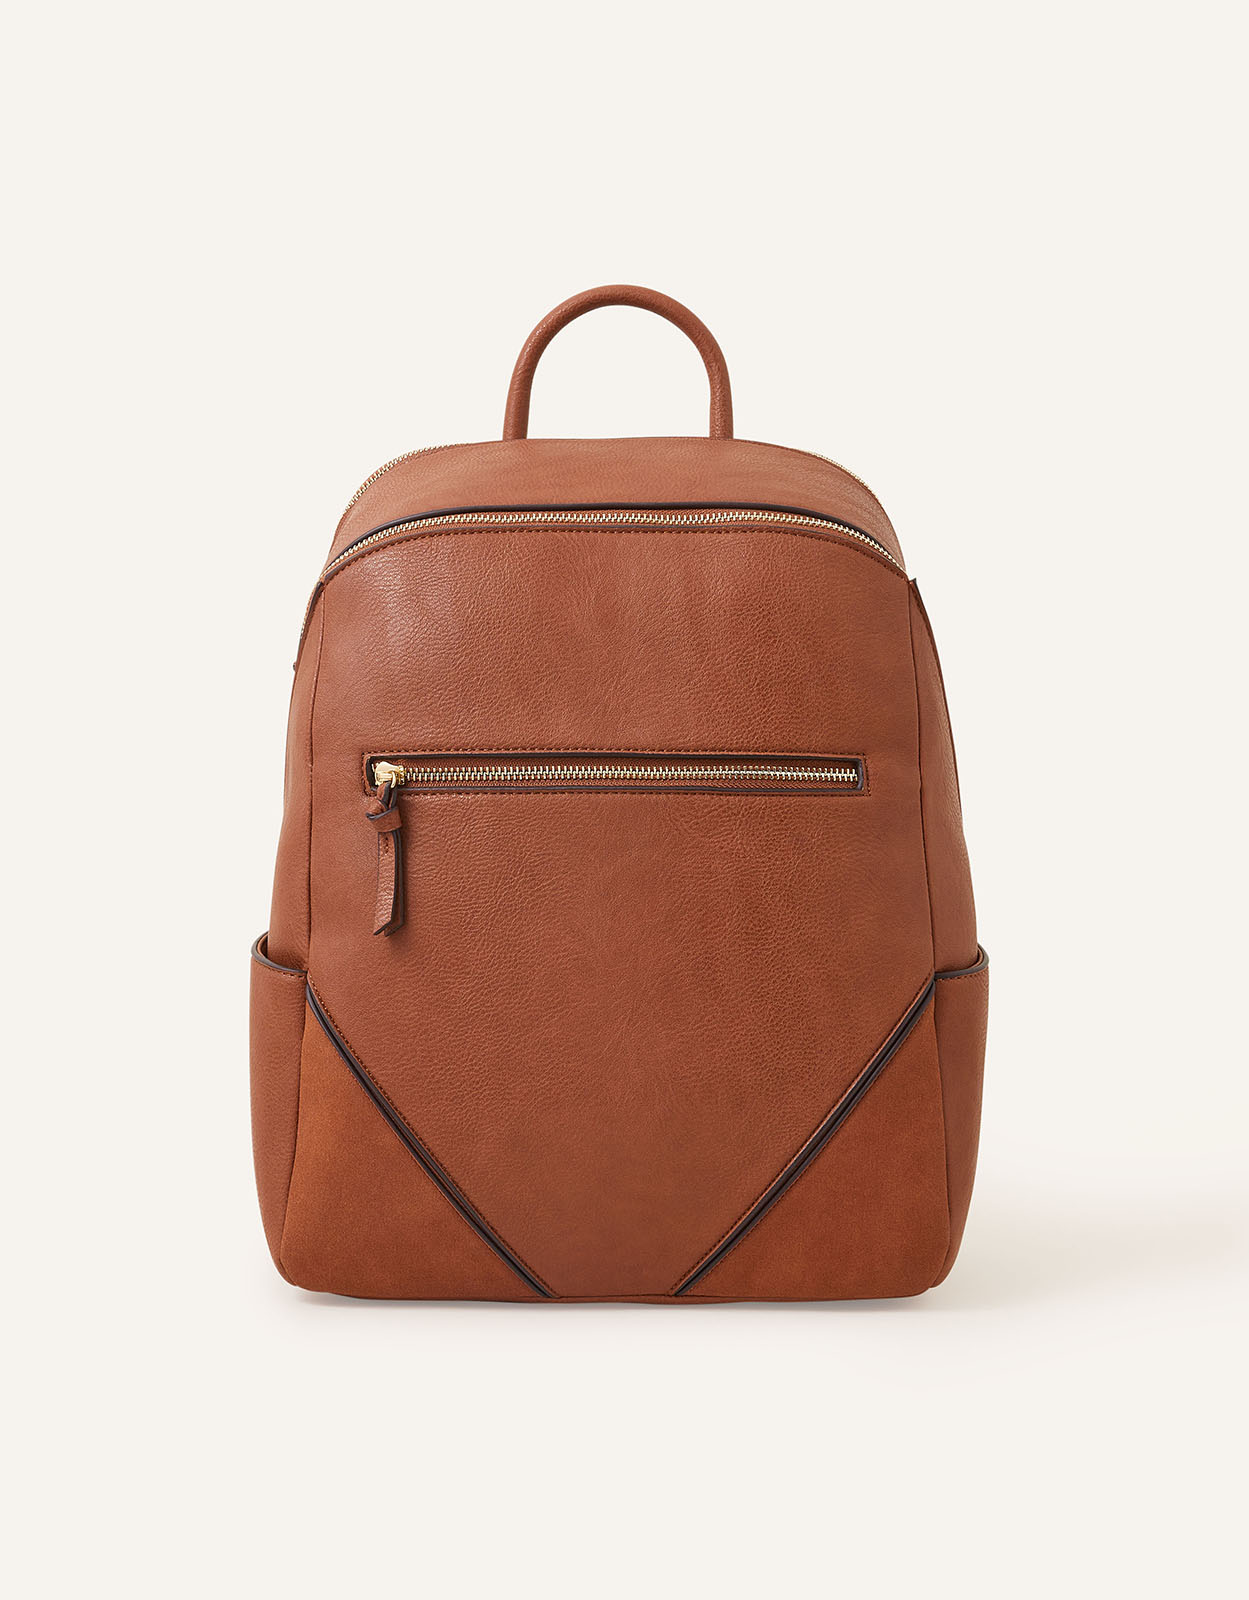 Accessorize Women's Classic Zip Around Backpack Tan, Size: 36x28cm